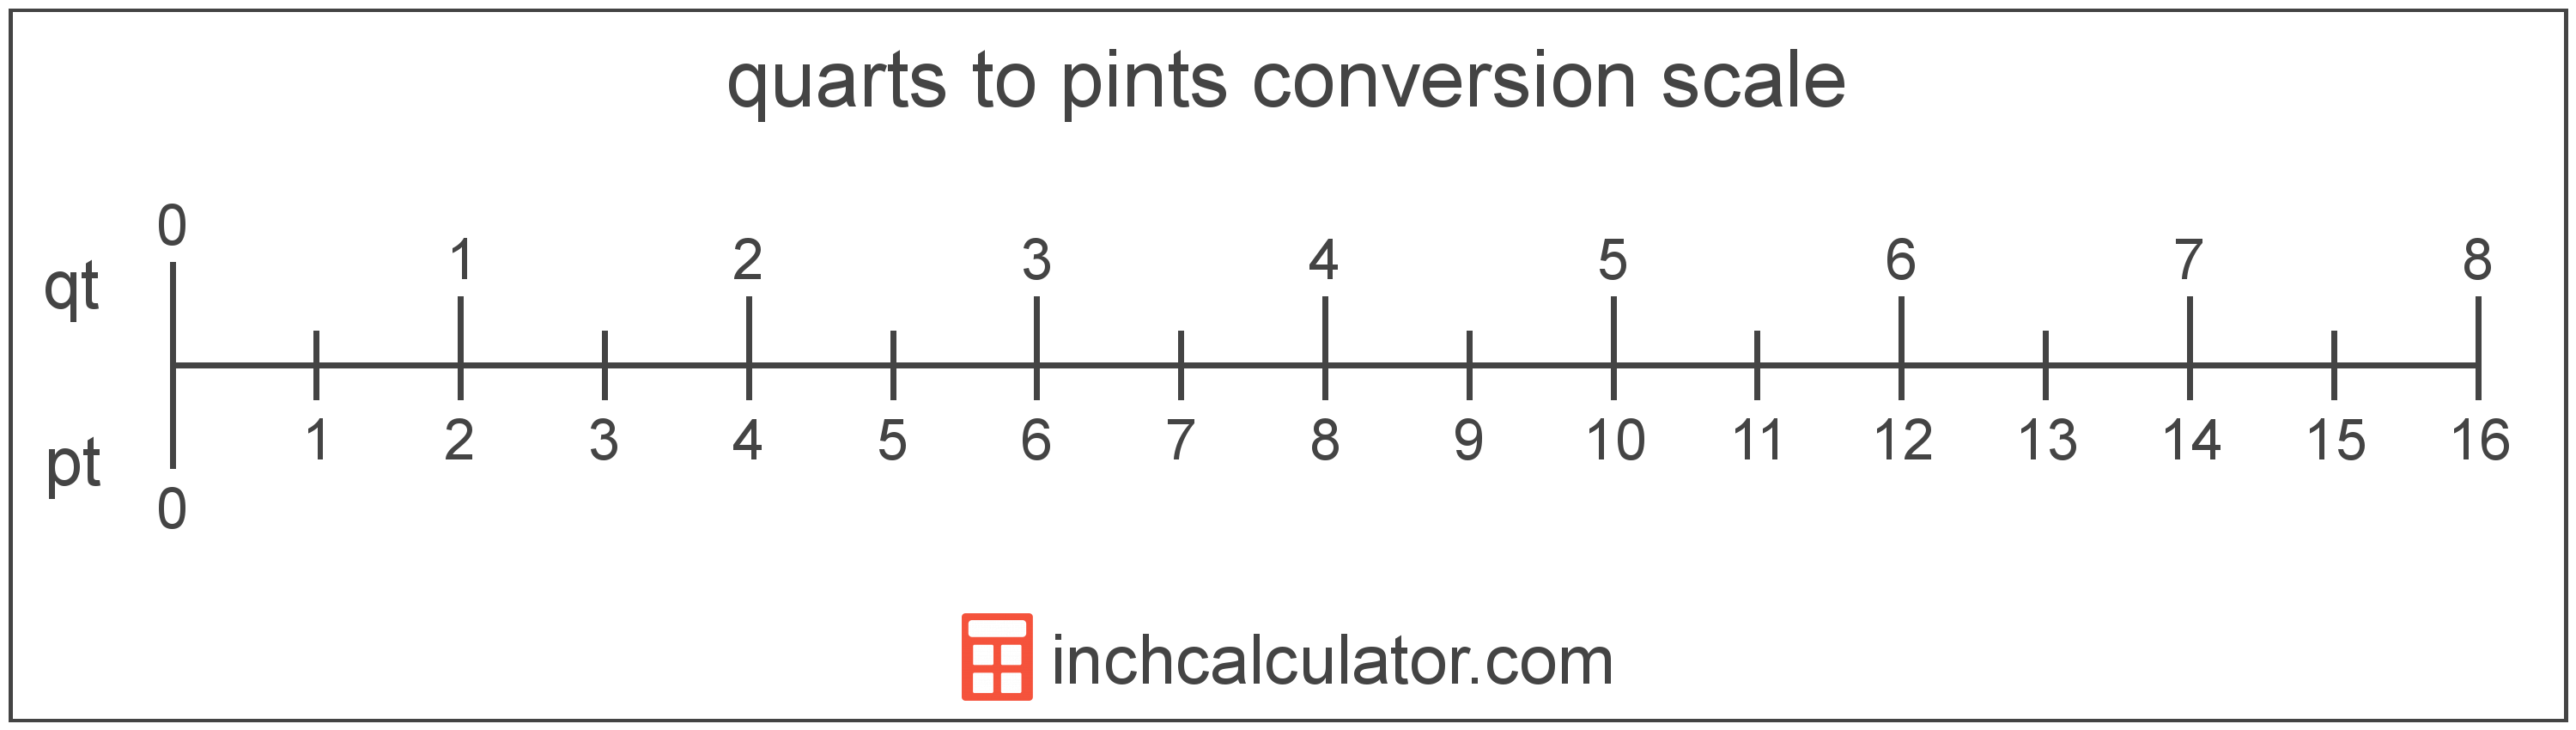 conversion scale showing pints and equivalent quarts volume values